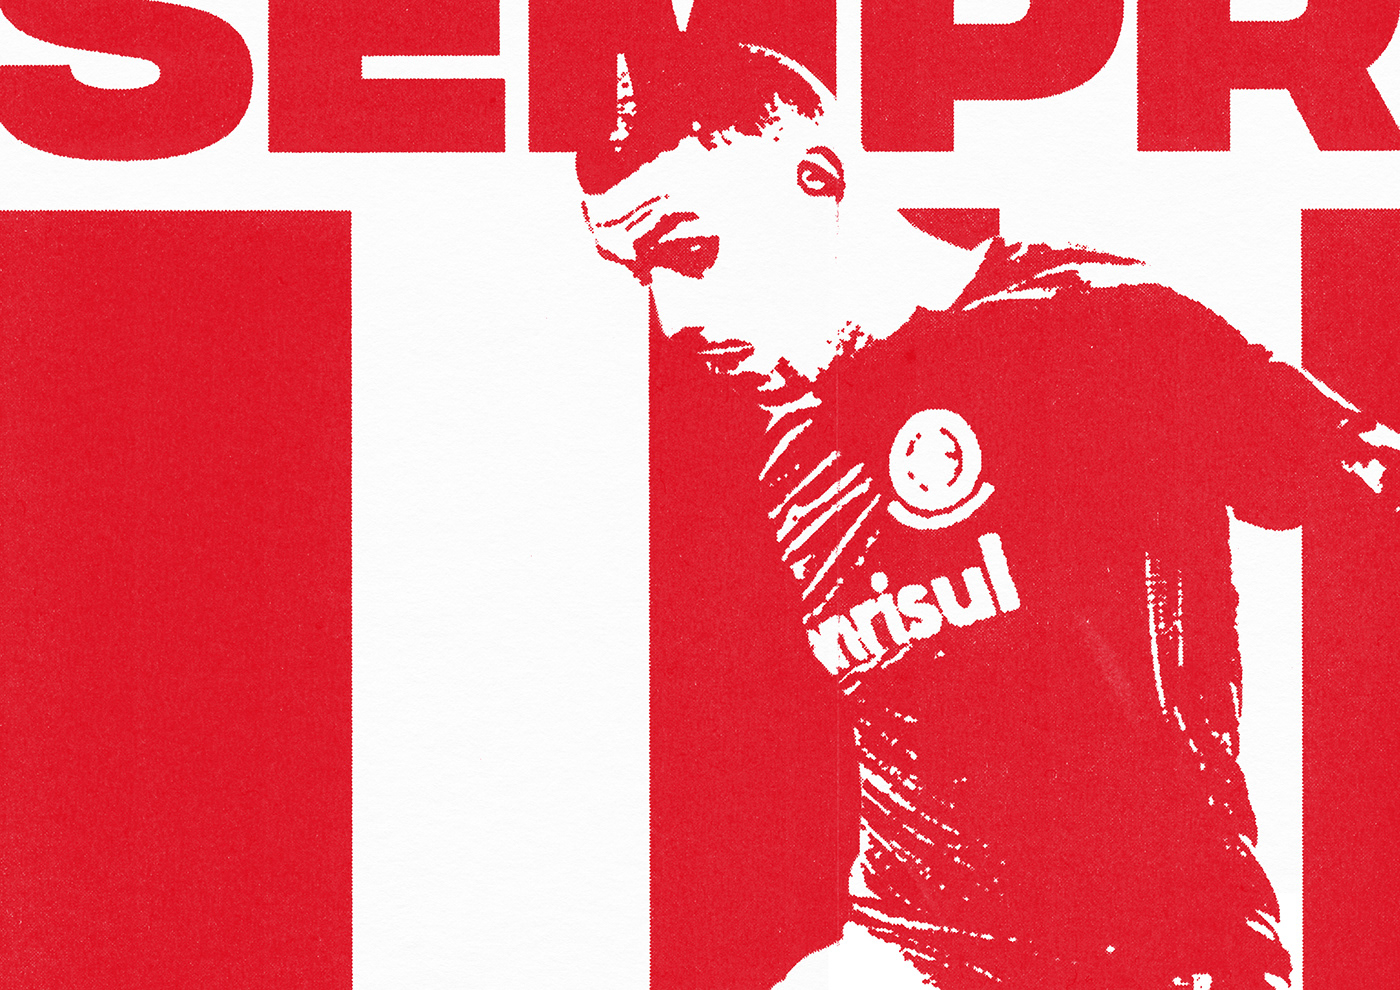 football print campaing internacional tipography nike football graphic design  são paulo Brazilian